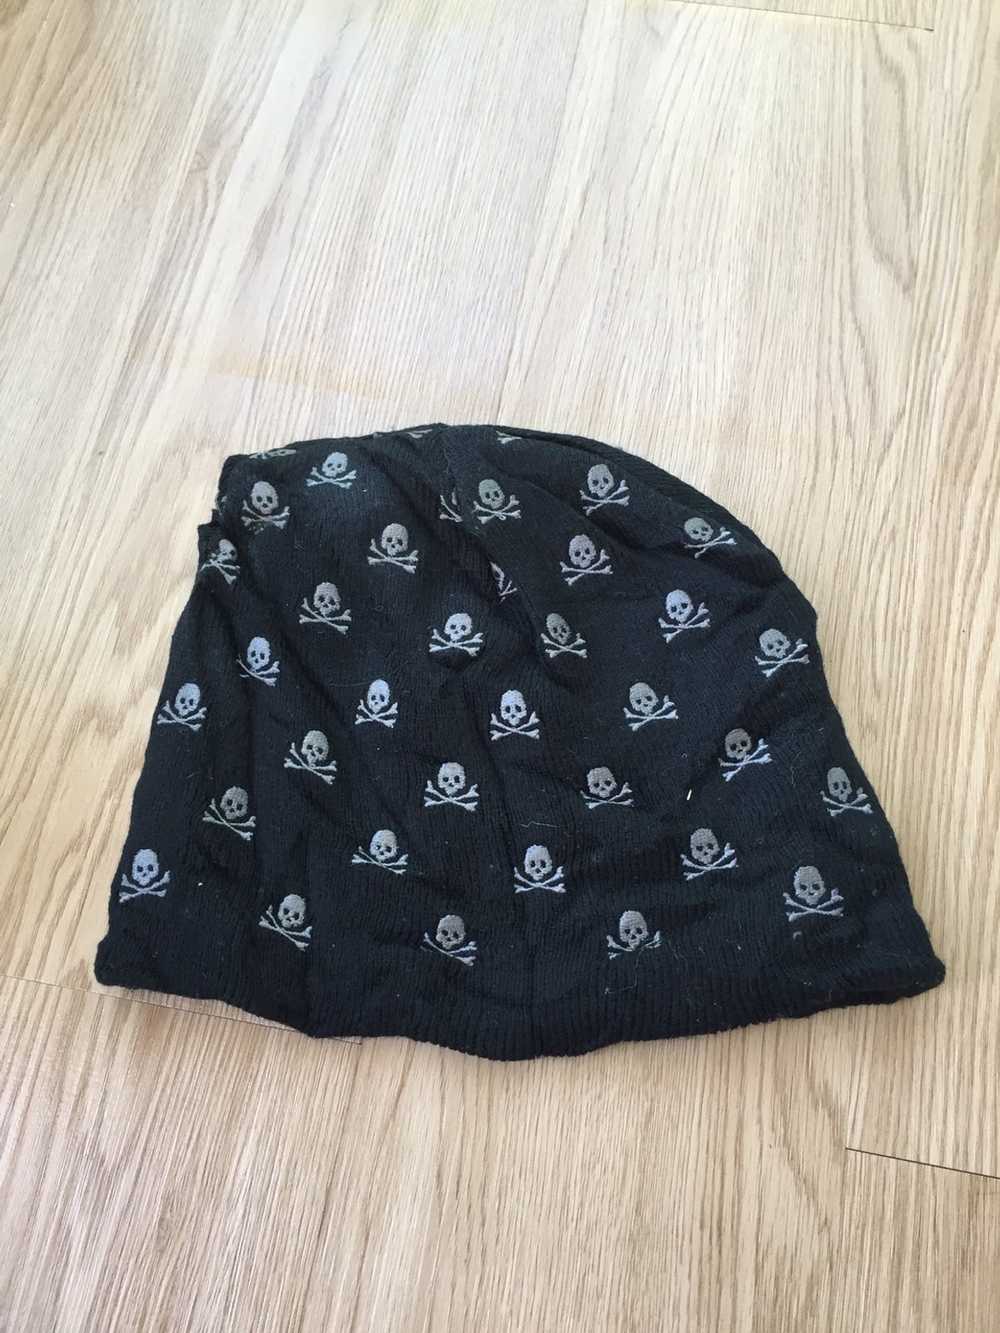 Other × Streetwear Skull design beanie winter cap - image 2